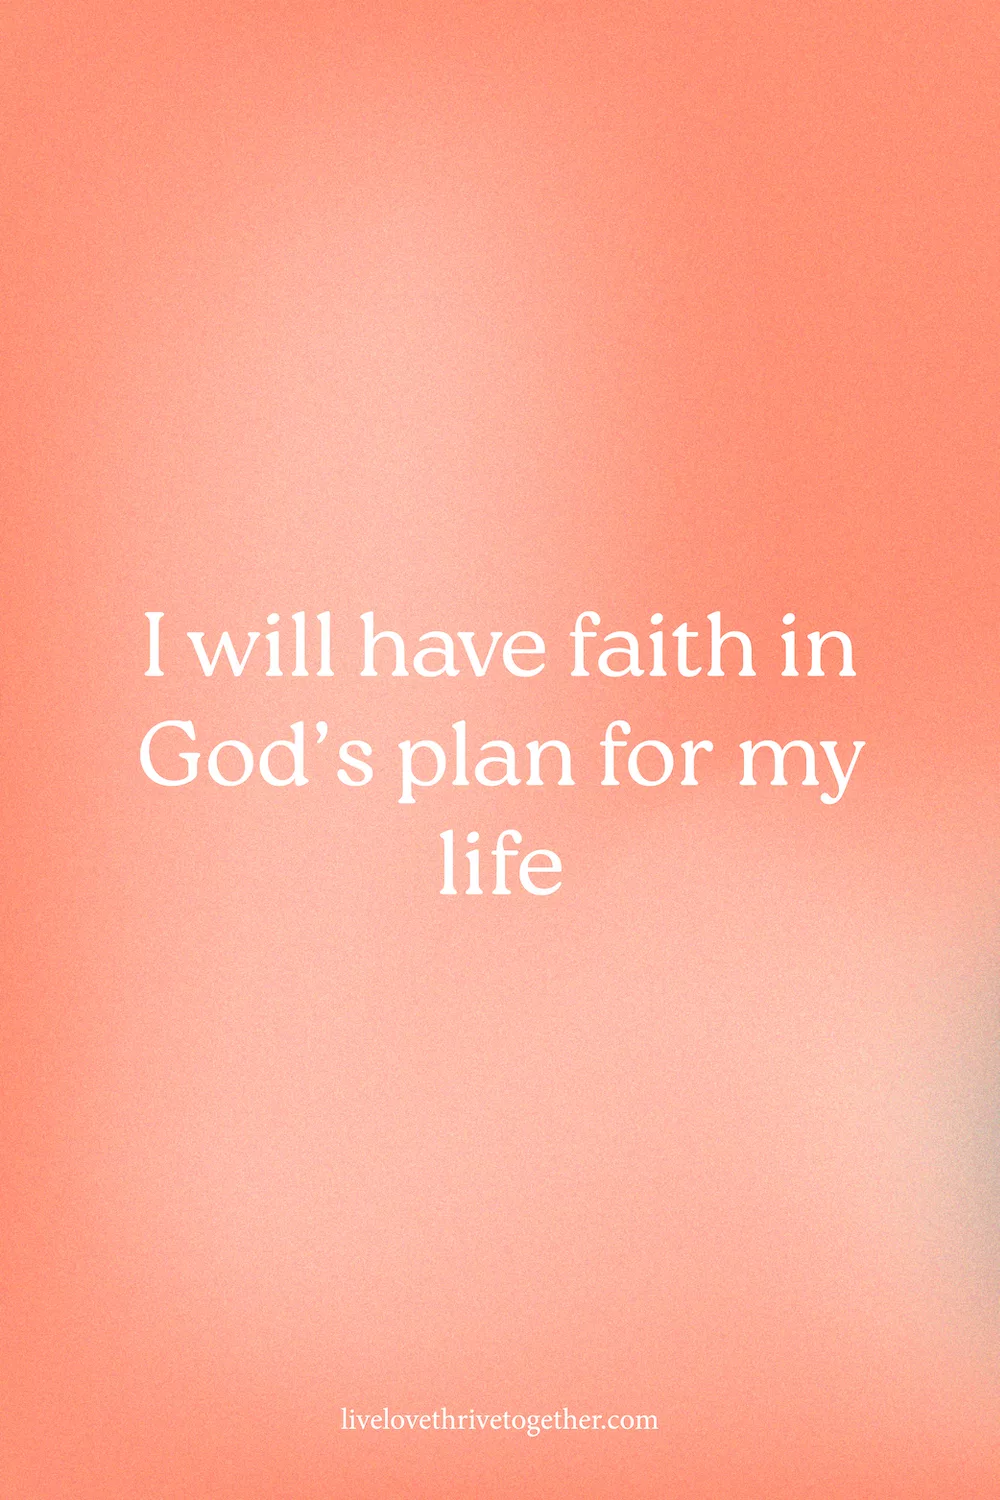 Tendré fe en el plan de Dios para mi vida | Monday Affirmations